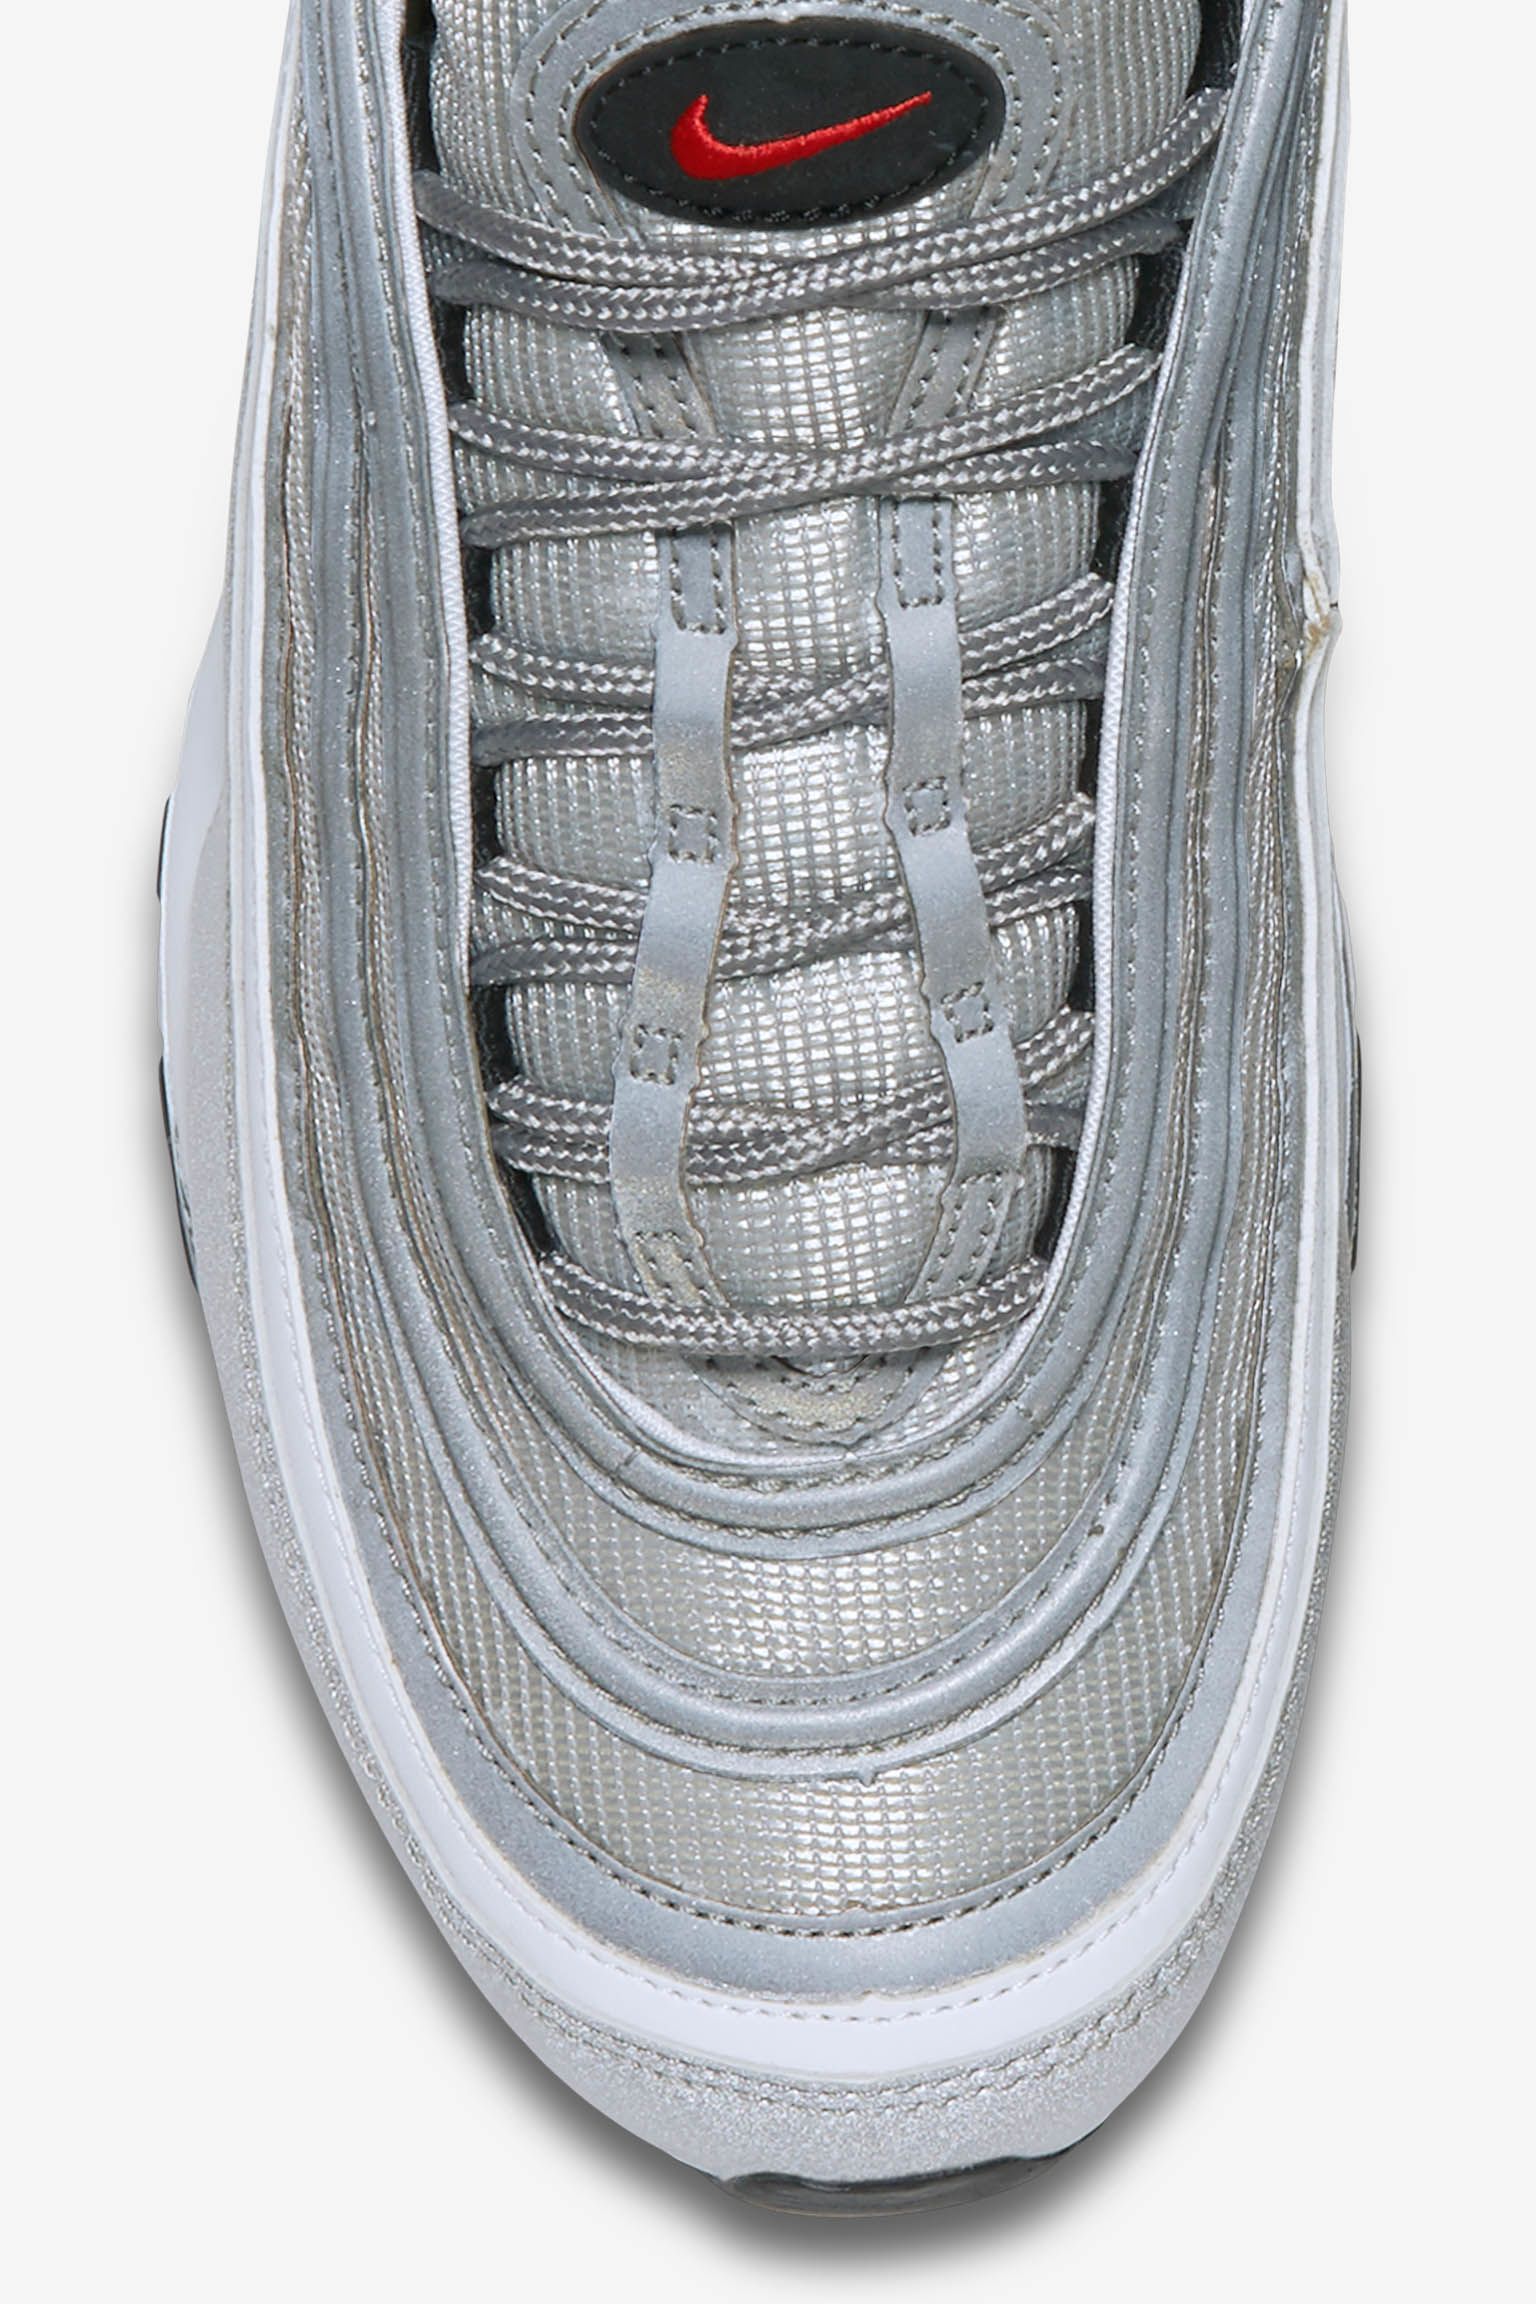 acelerador Pensativo marca Nike Air Max 97 OG "Metallic Silver". Nike SNKRS ES